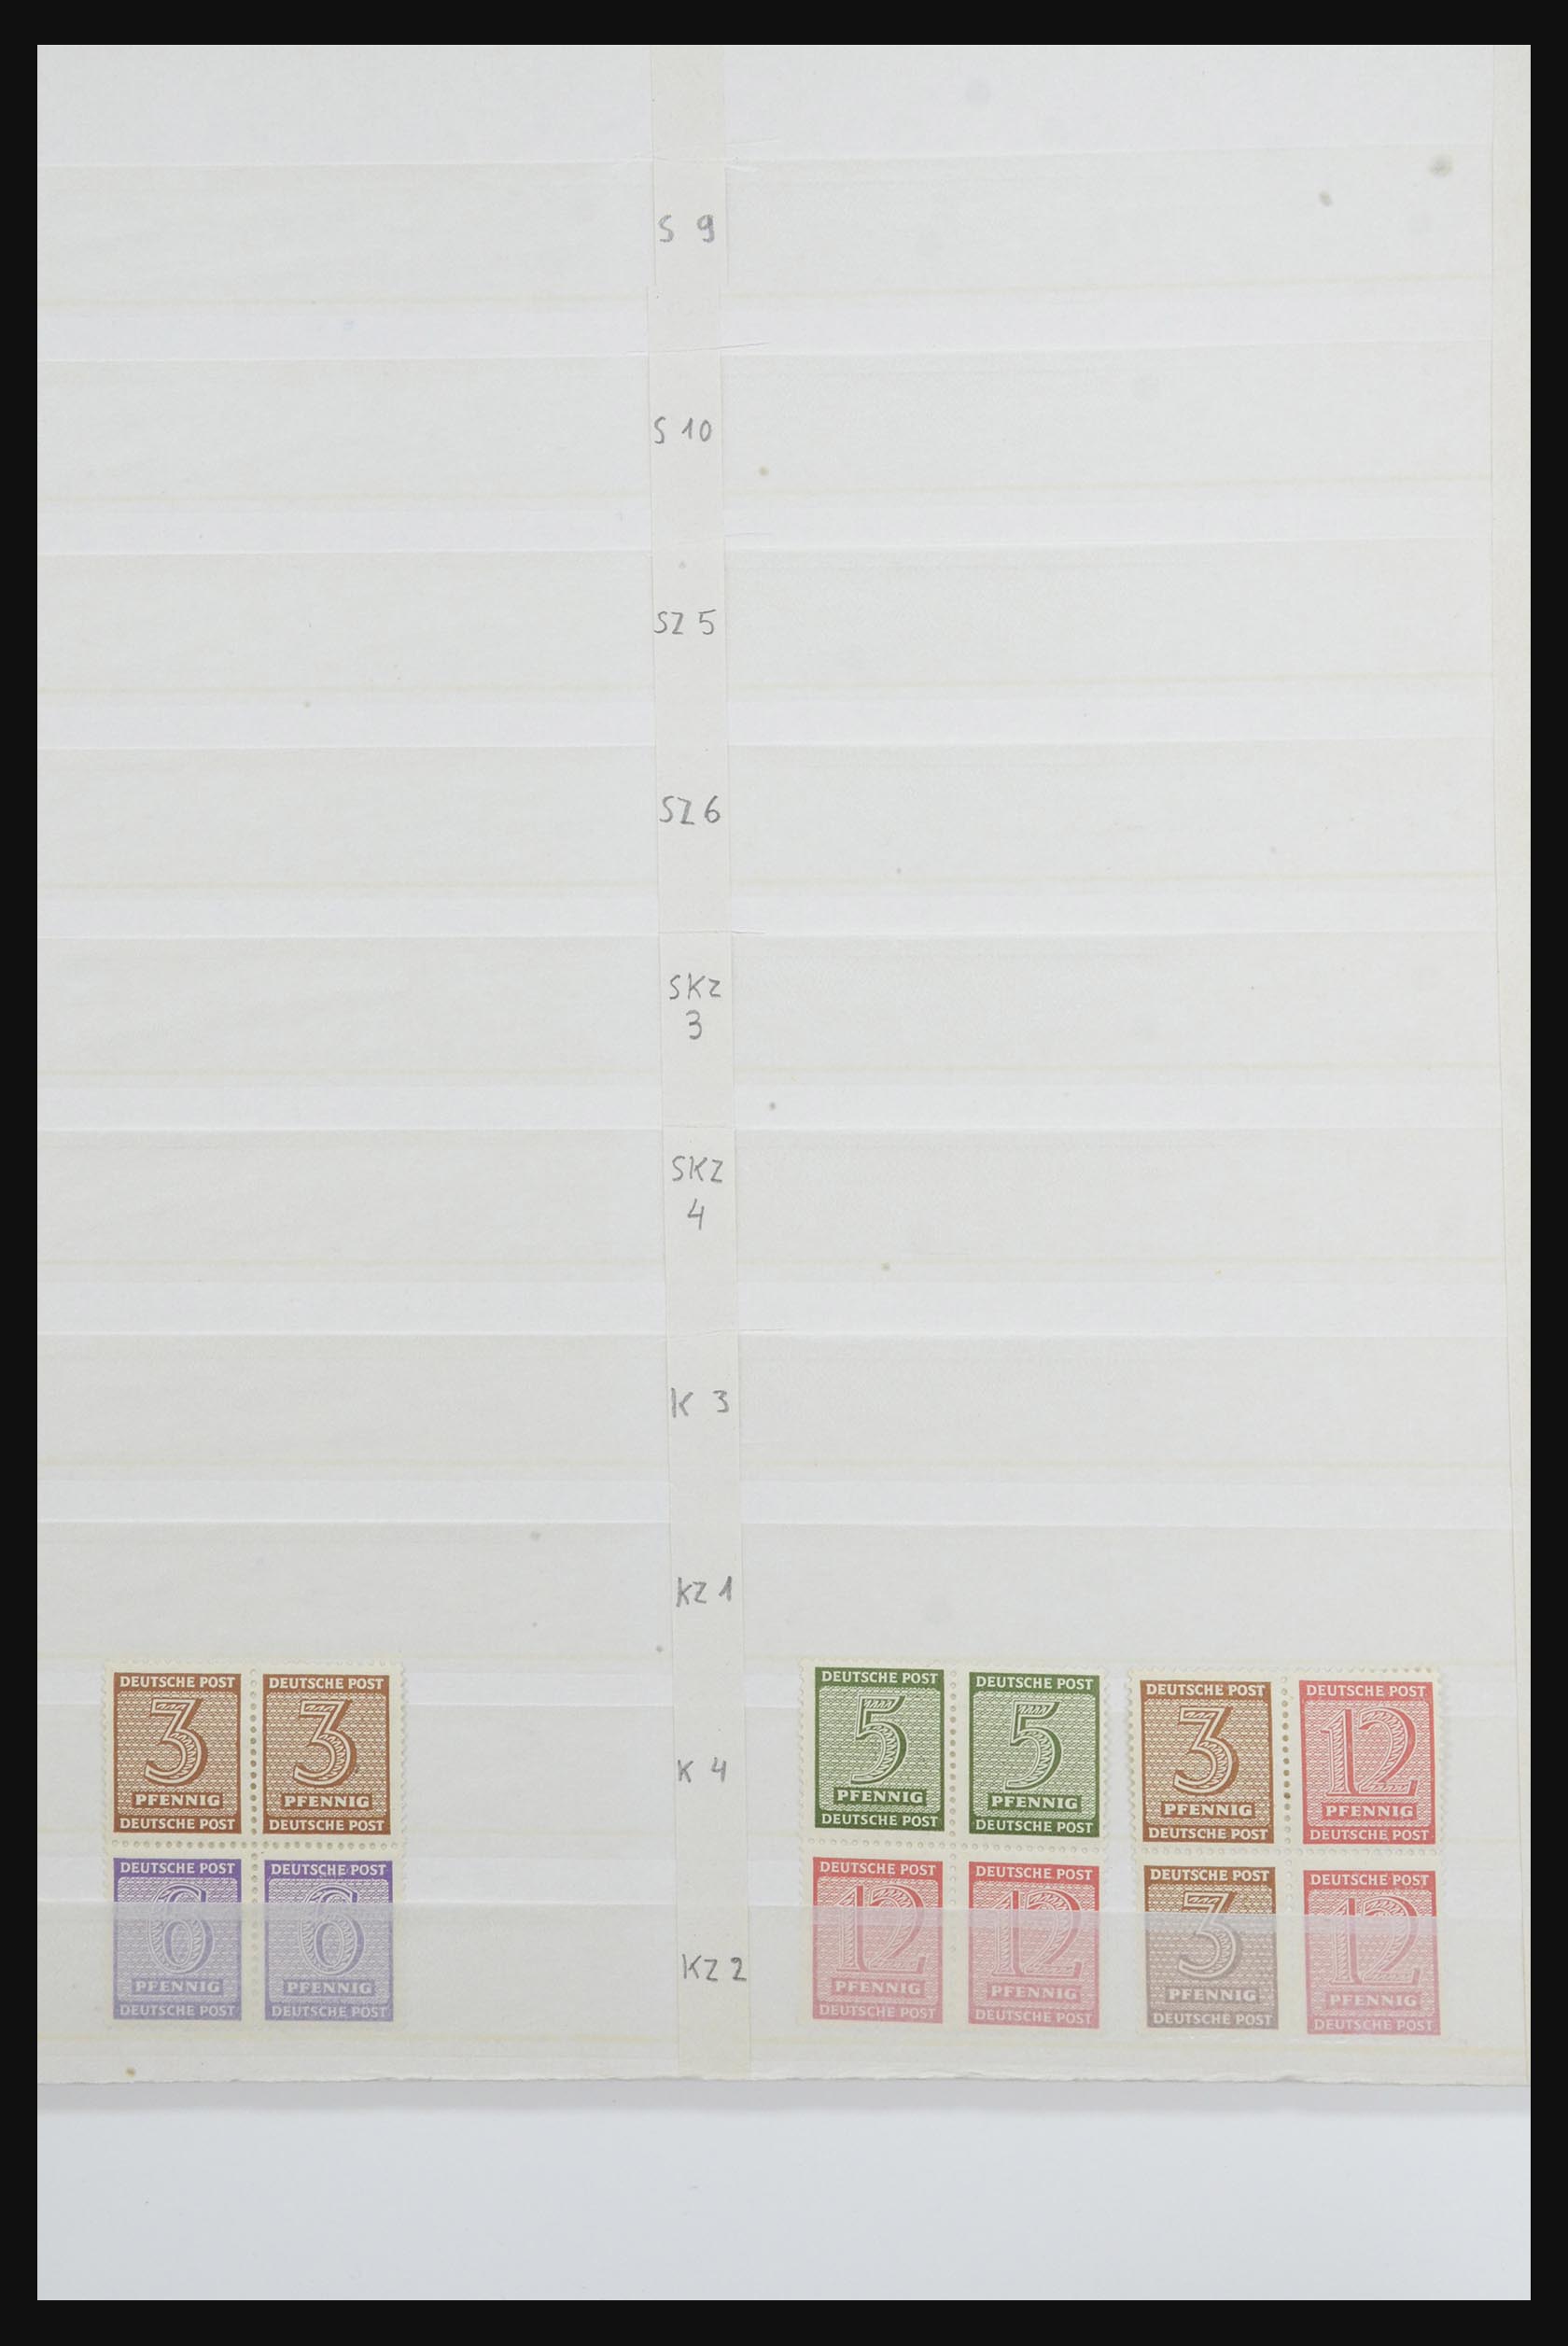 31884 077 - 31884 Germany combinations 1920-1980.